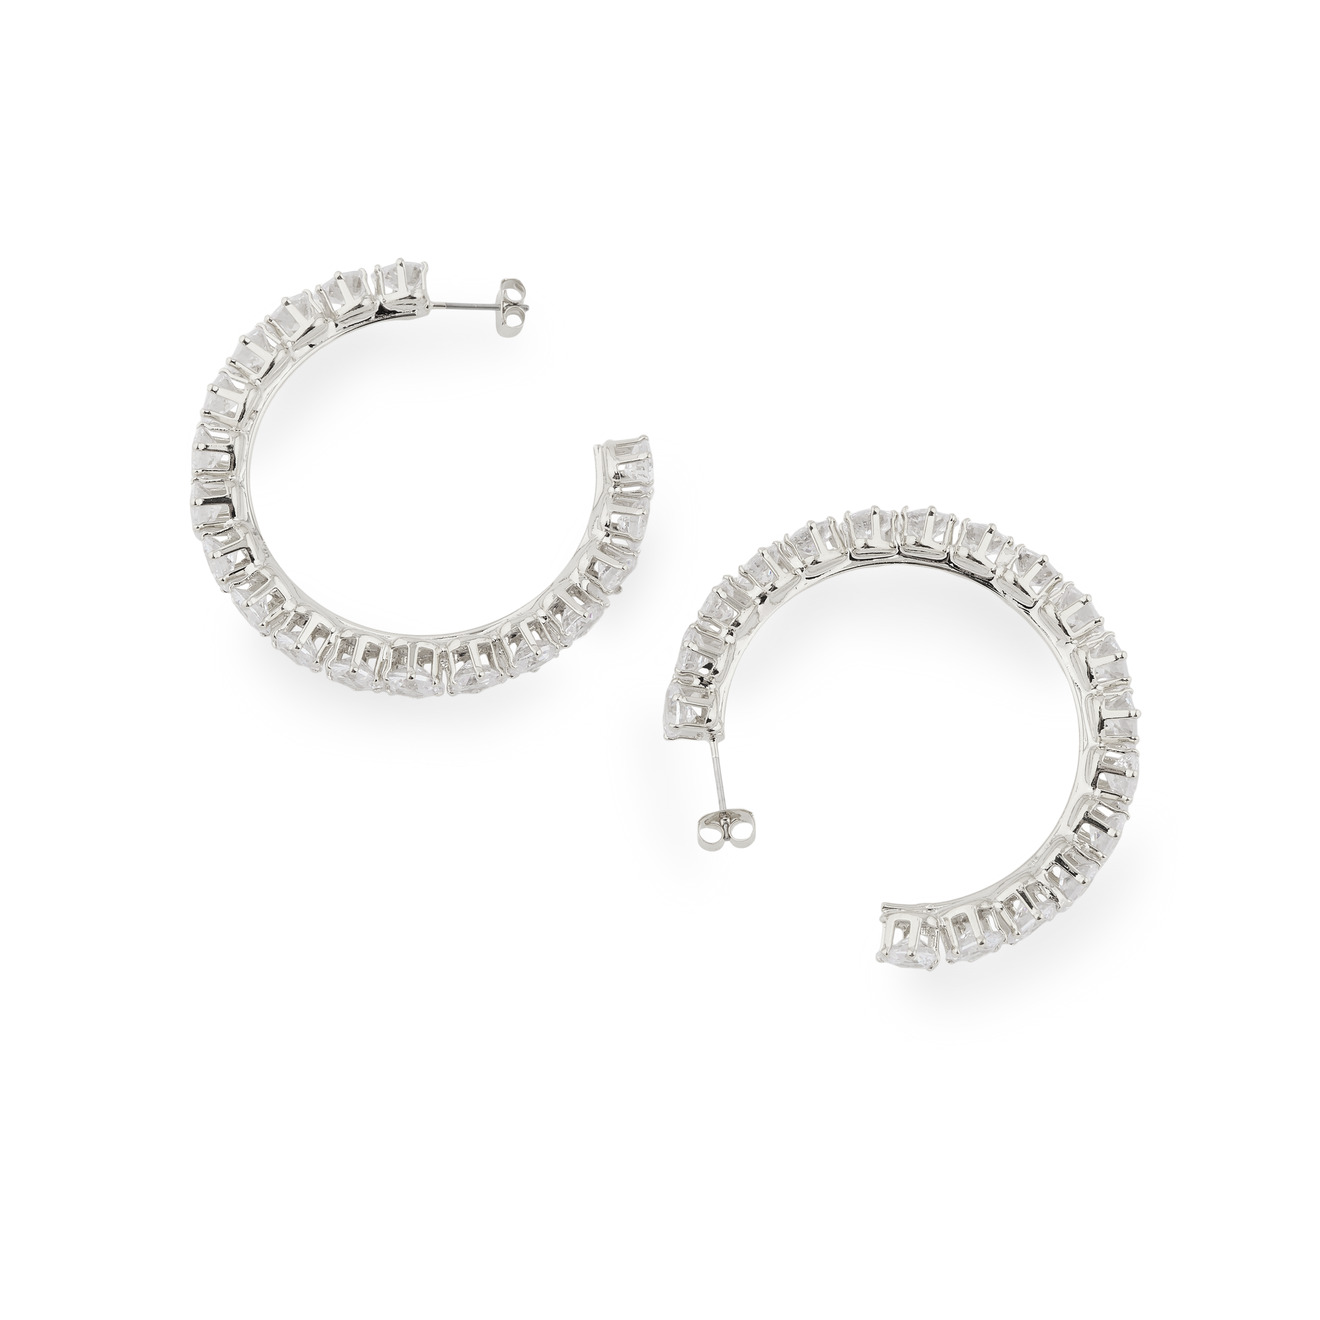 Herald Percy Серебристые серьги-кольца с кристаллами herald percy серебристые серьги с каплями кристаллами